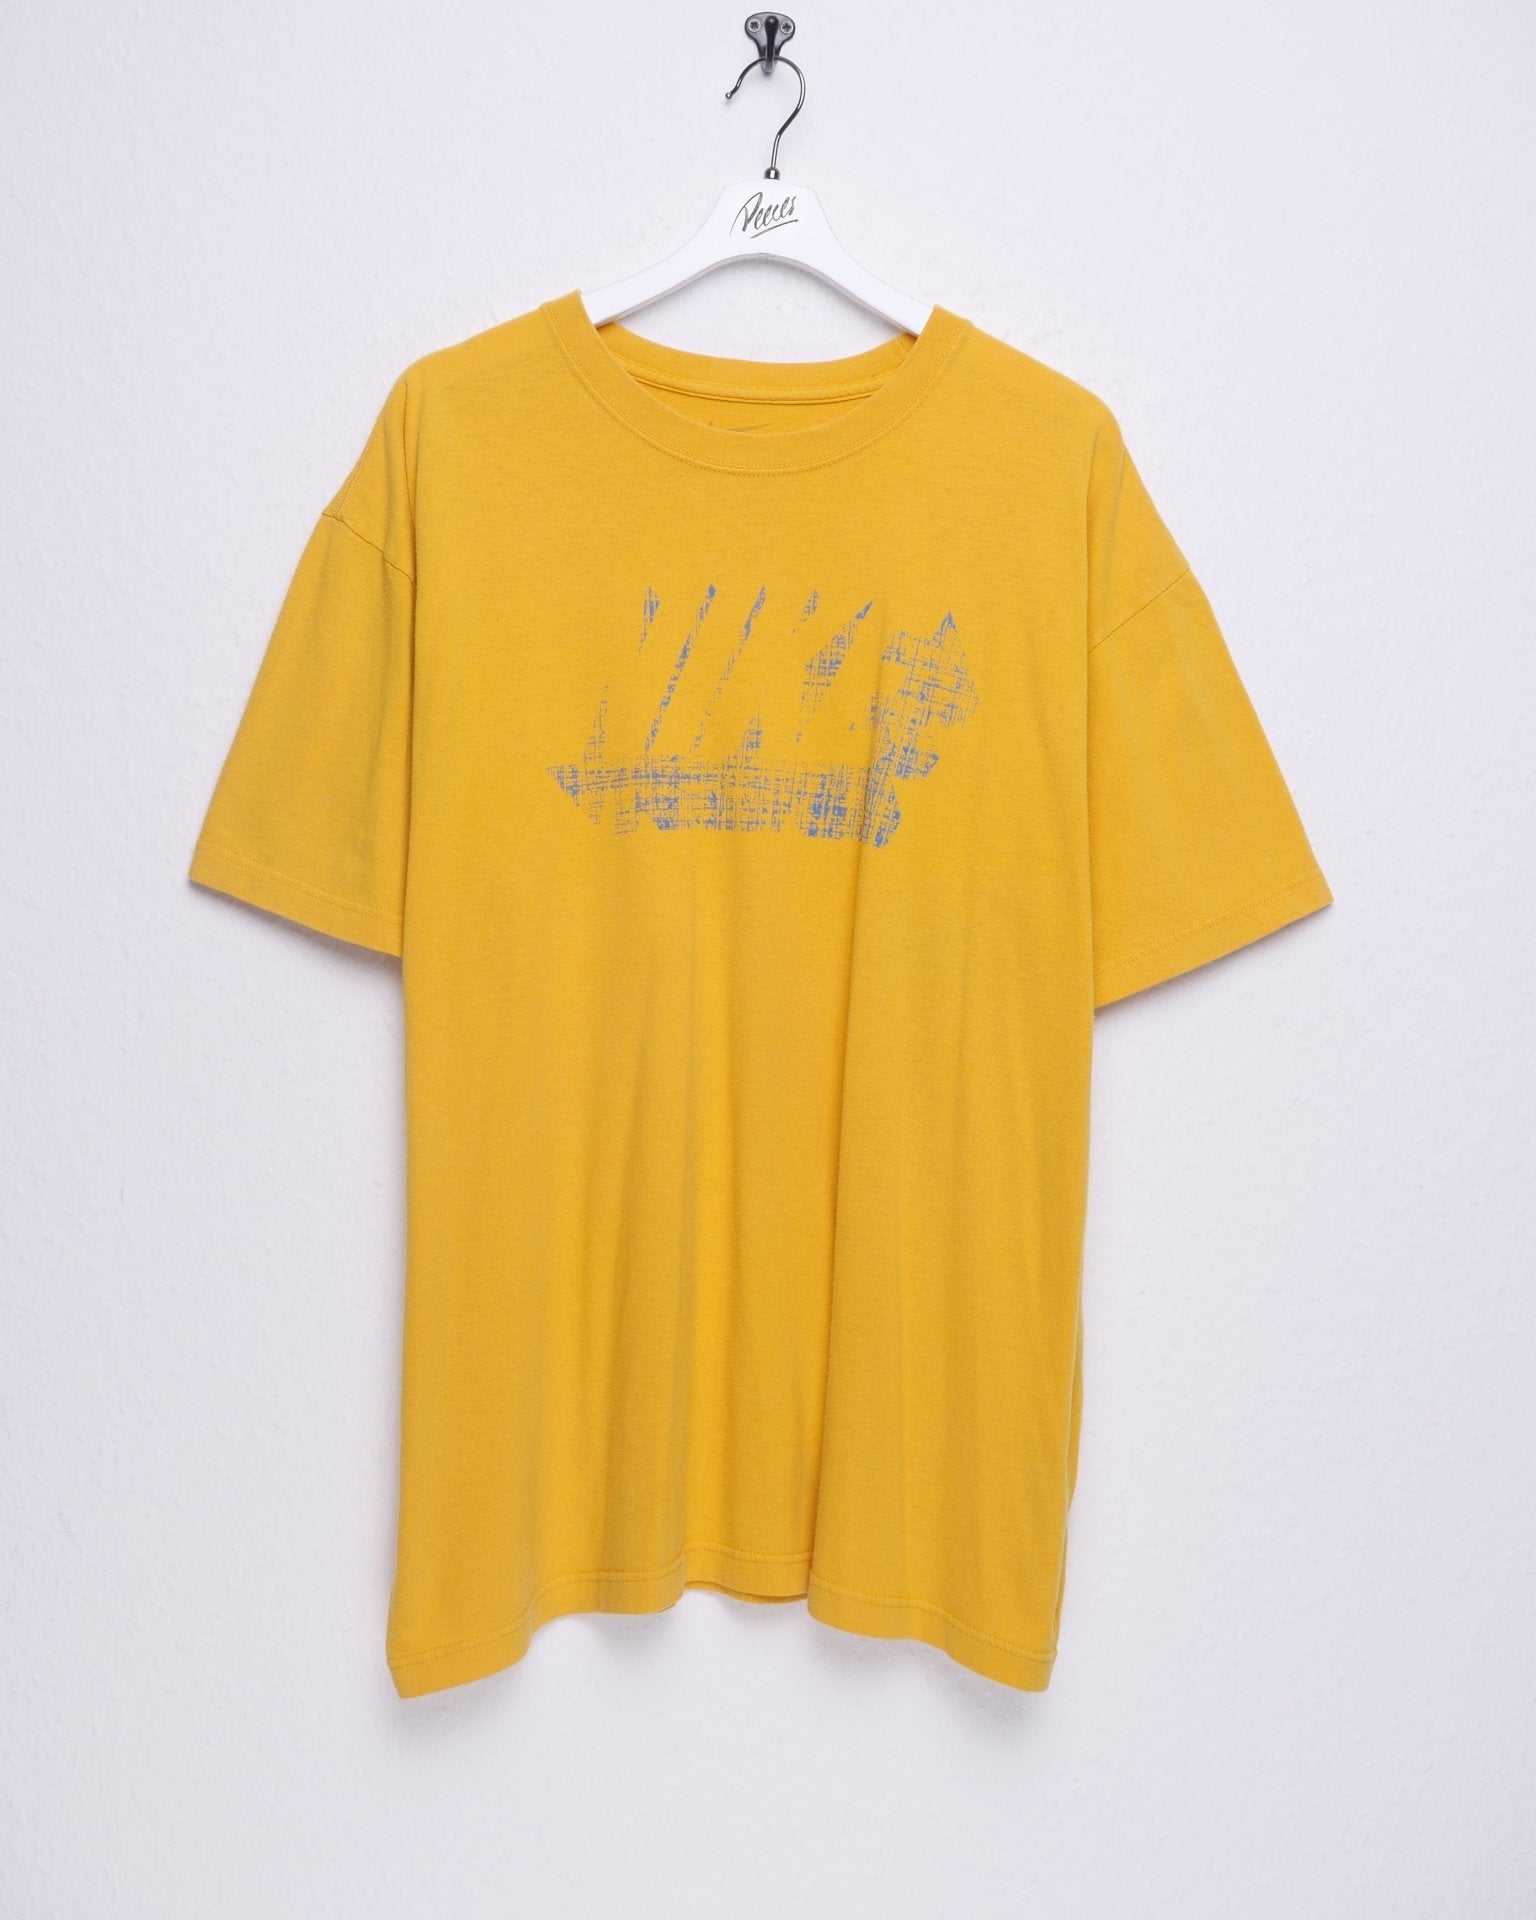 nike printed Logo yellow Shirt - Peeces